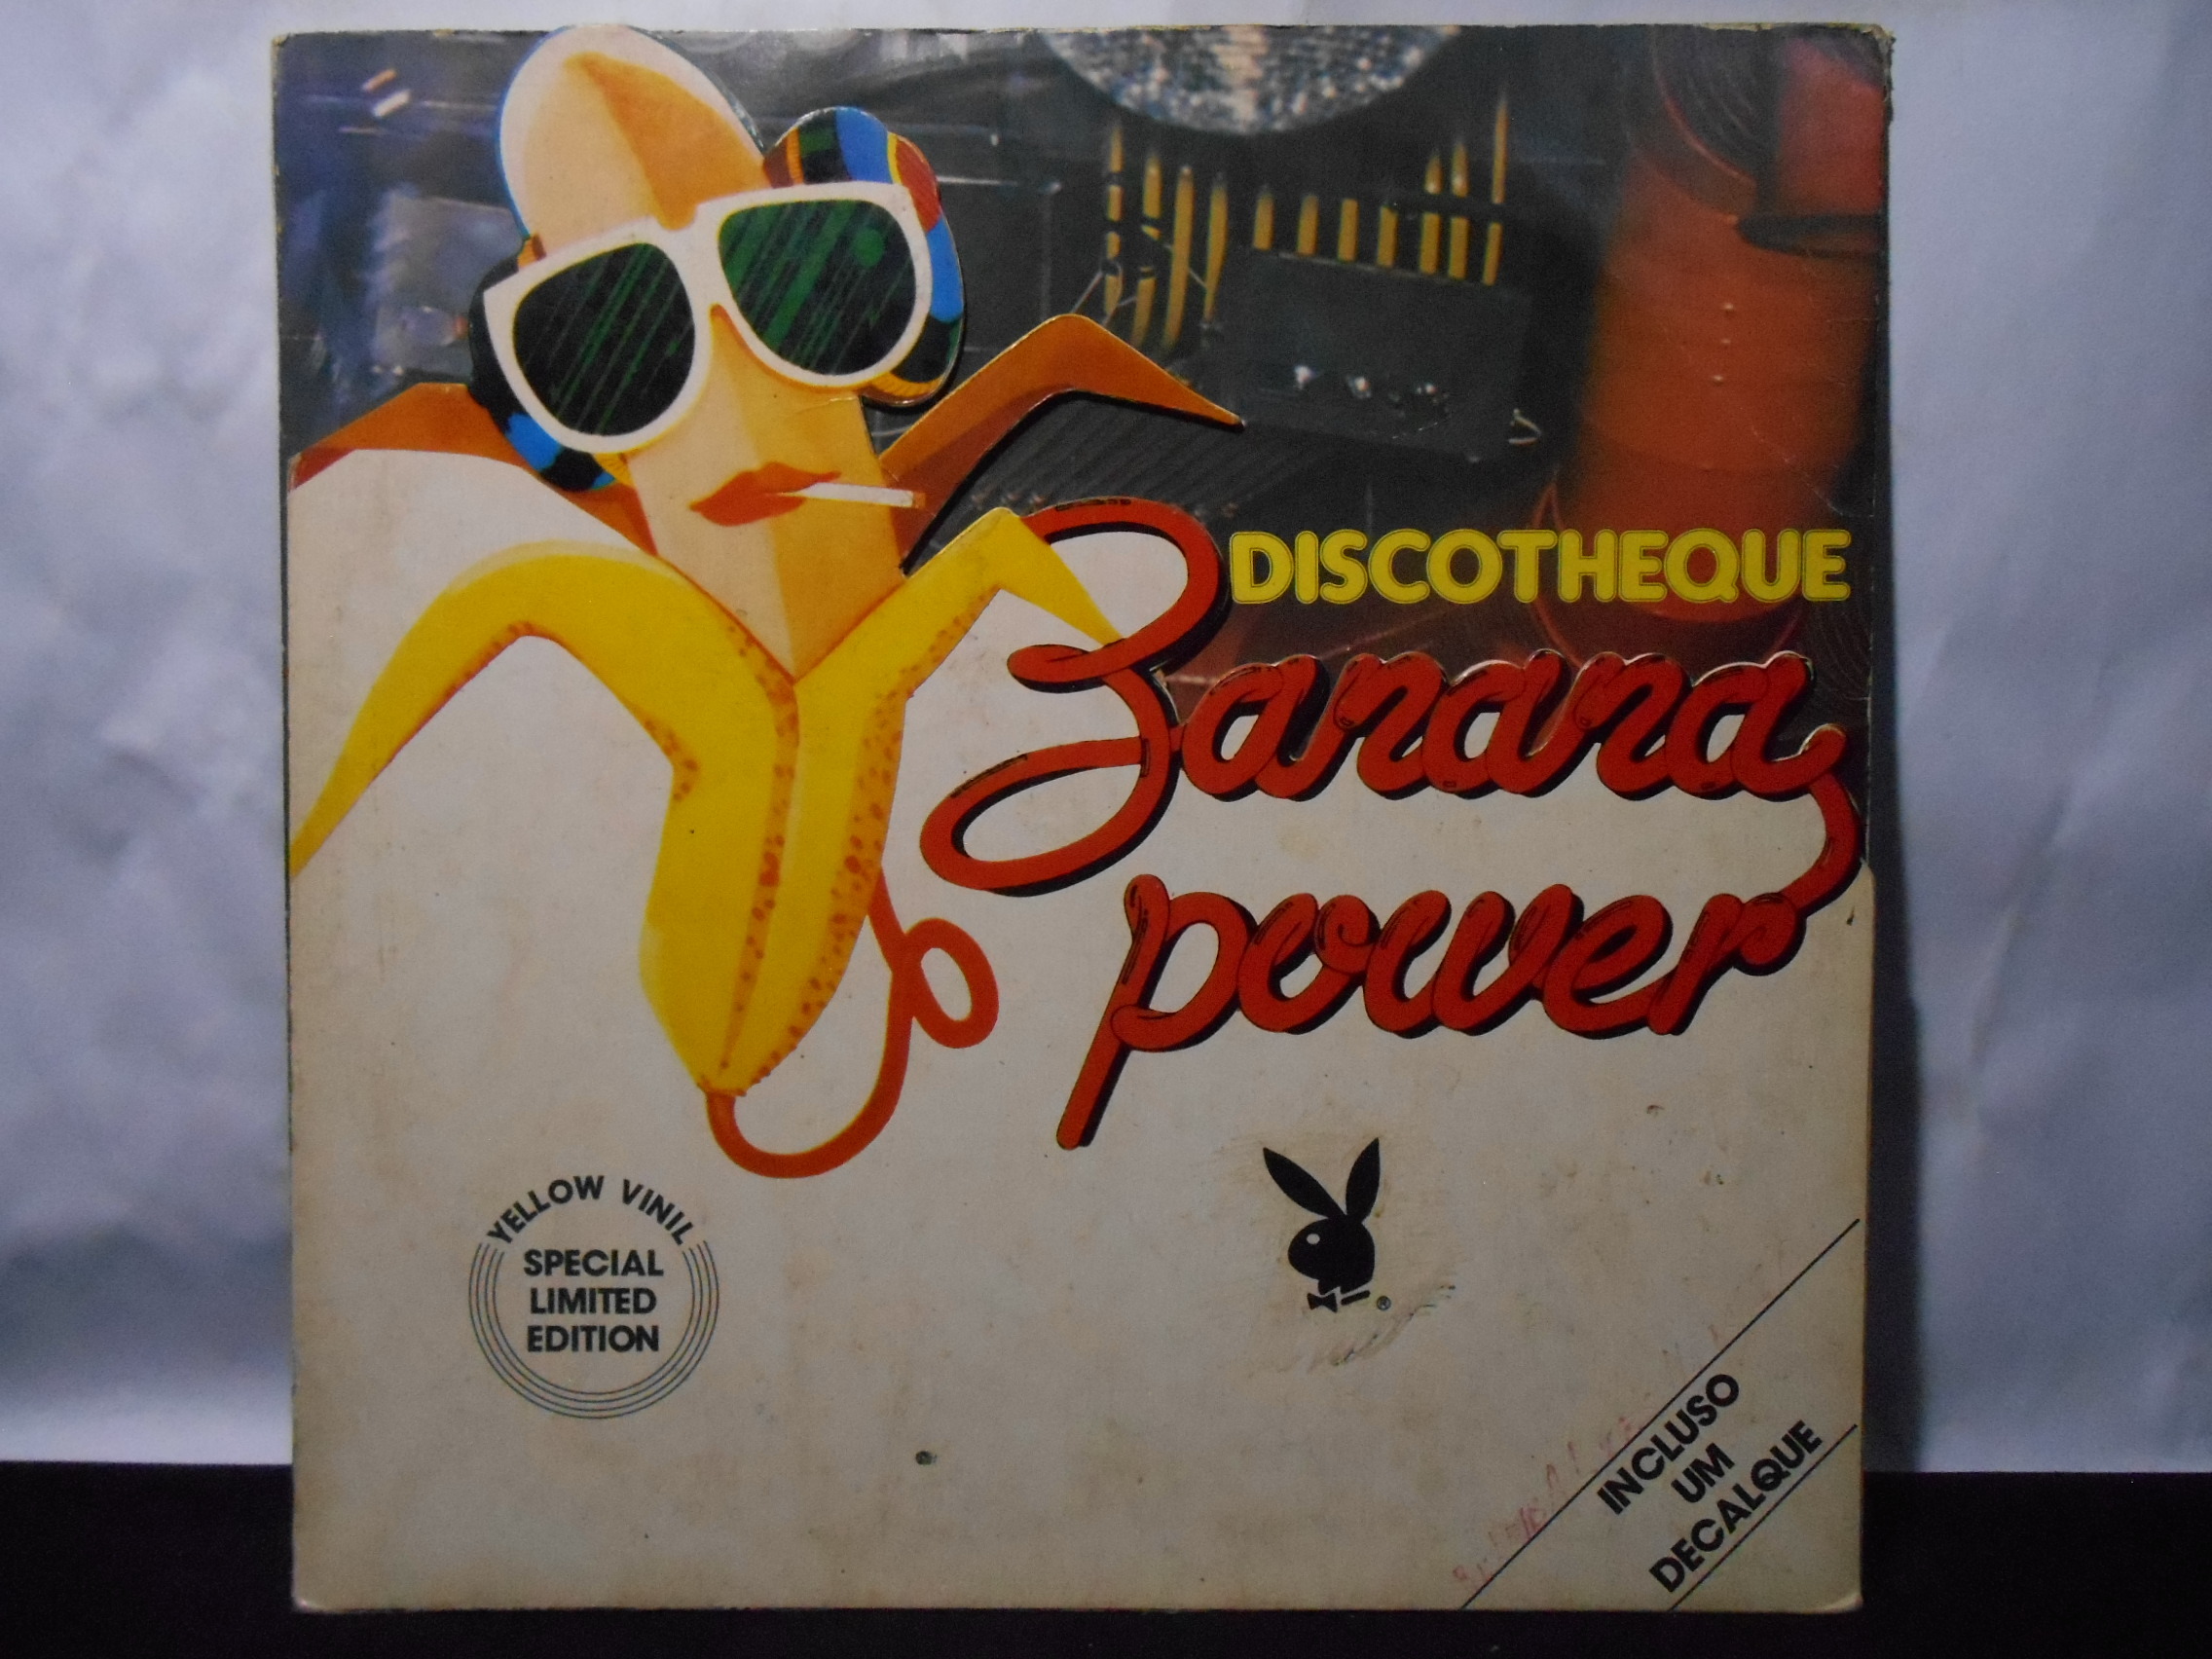 Vinil - Discoteque Banana Power